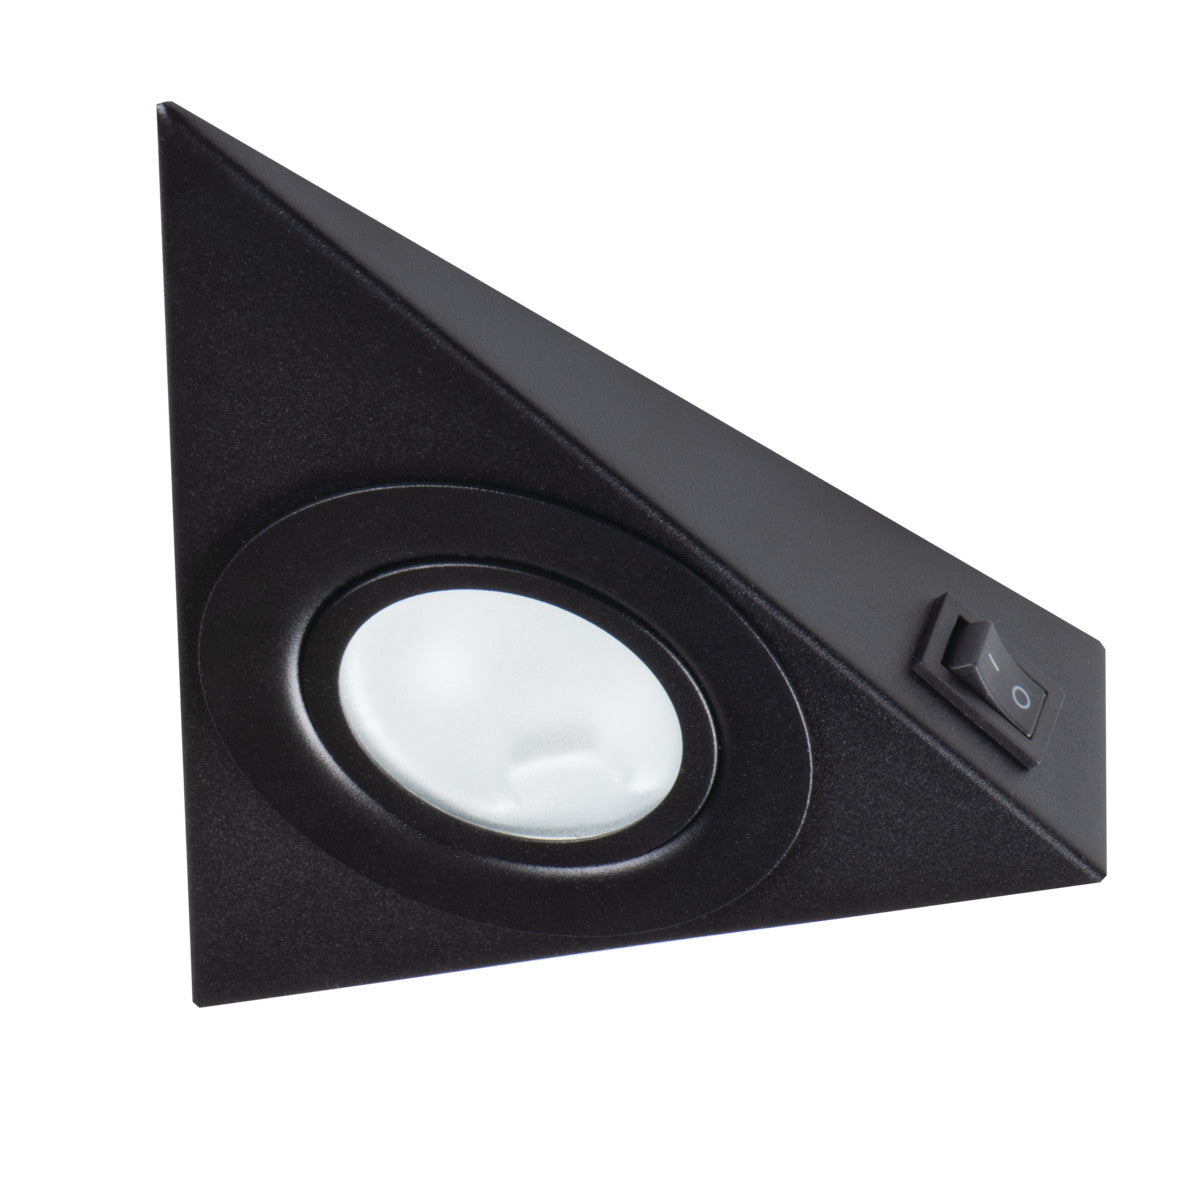 Kanlux ZEPO GU10 Under Cabinet Triangular Spot Light Fitting